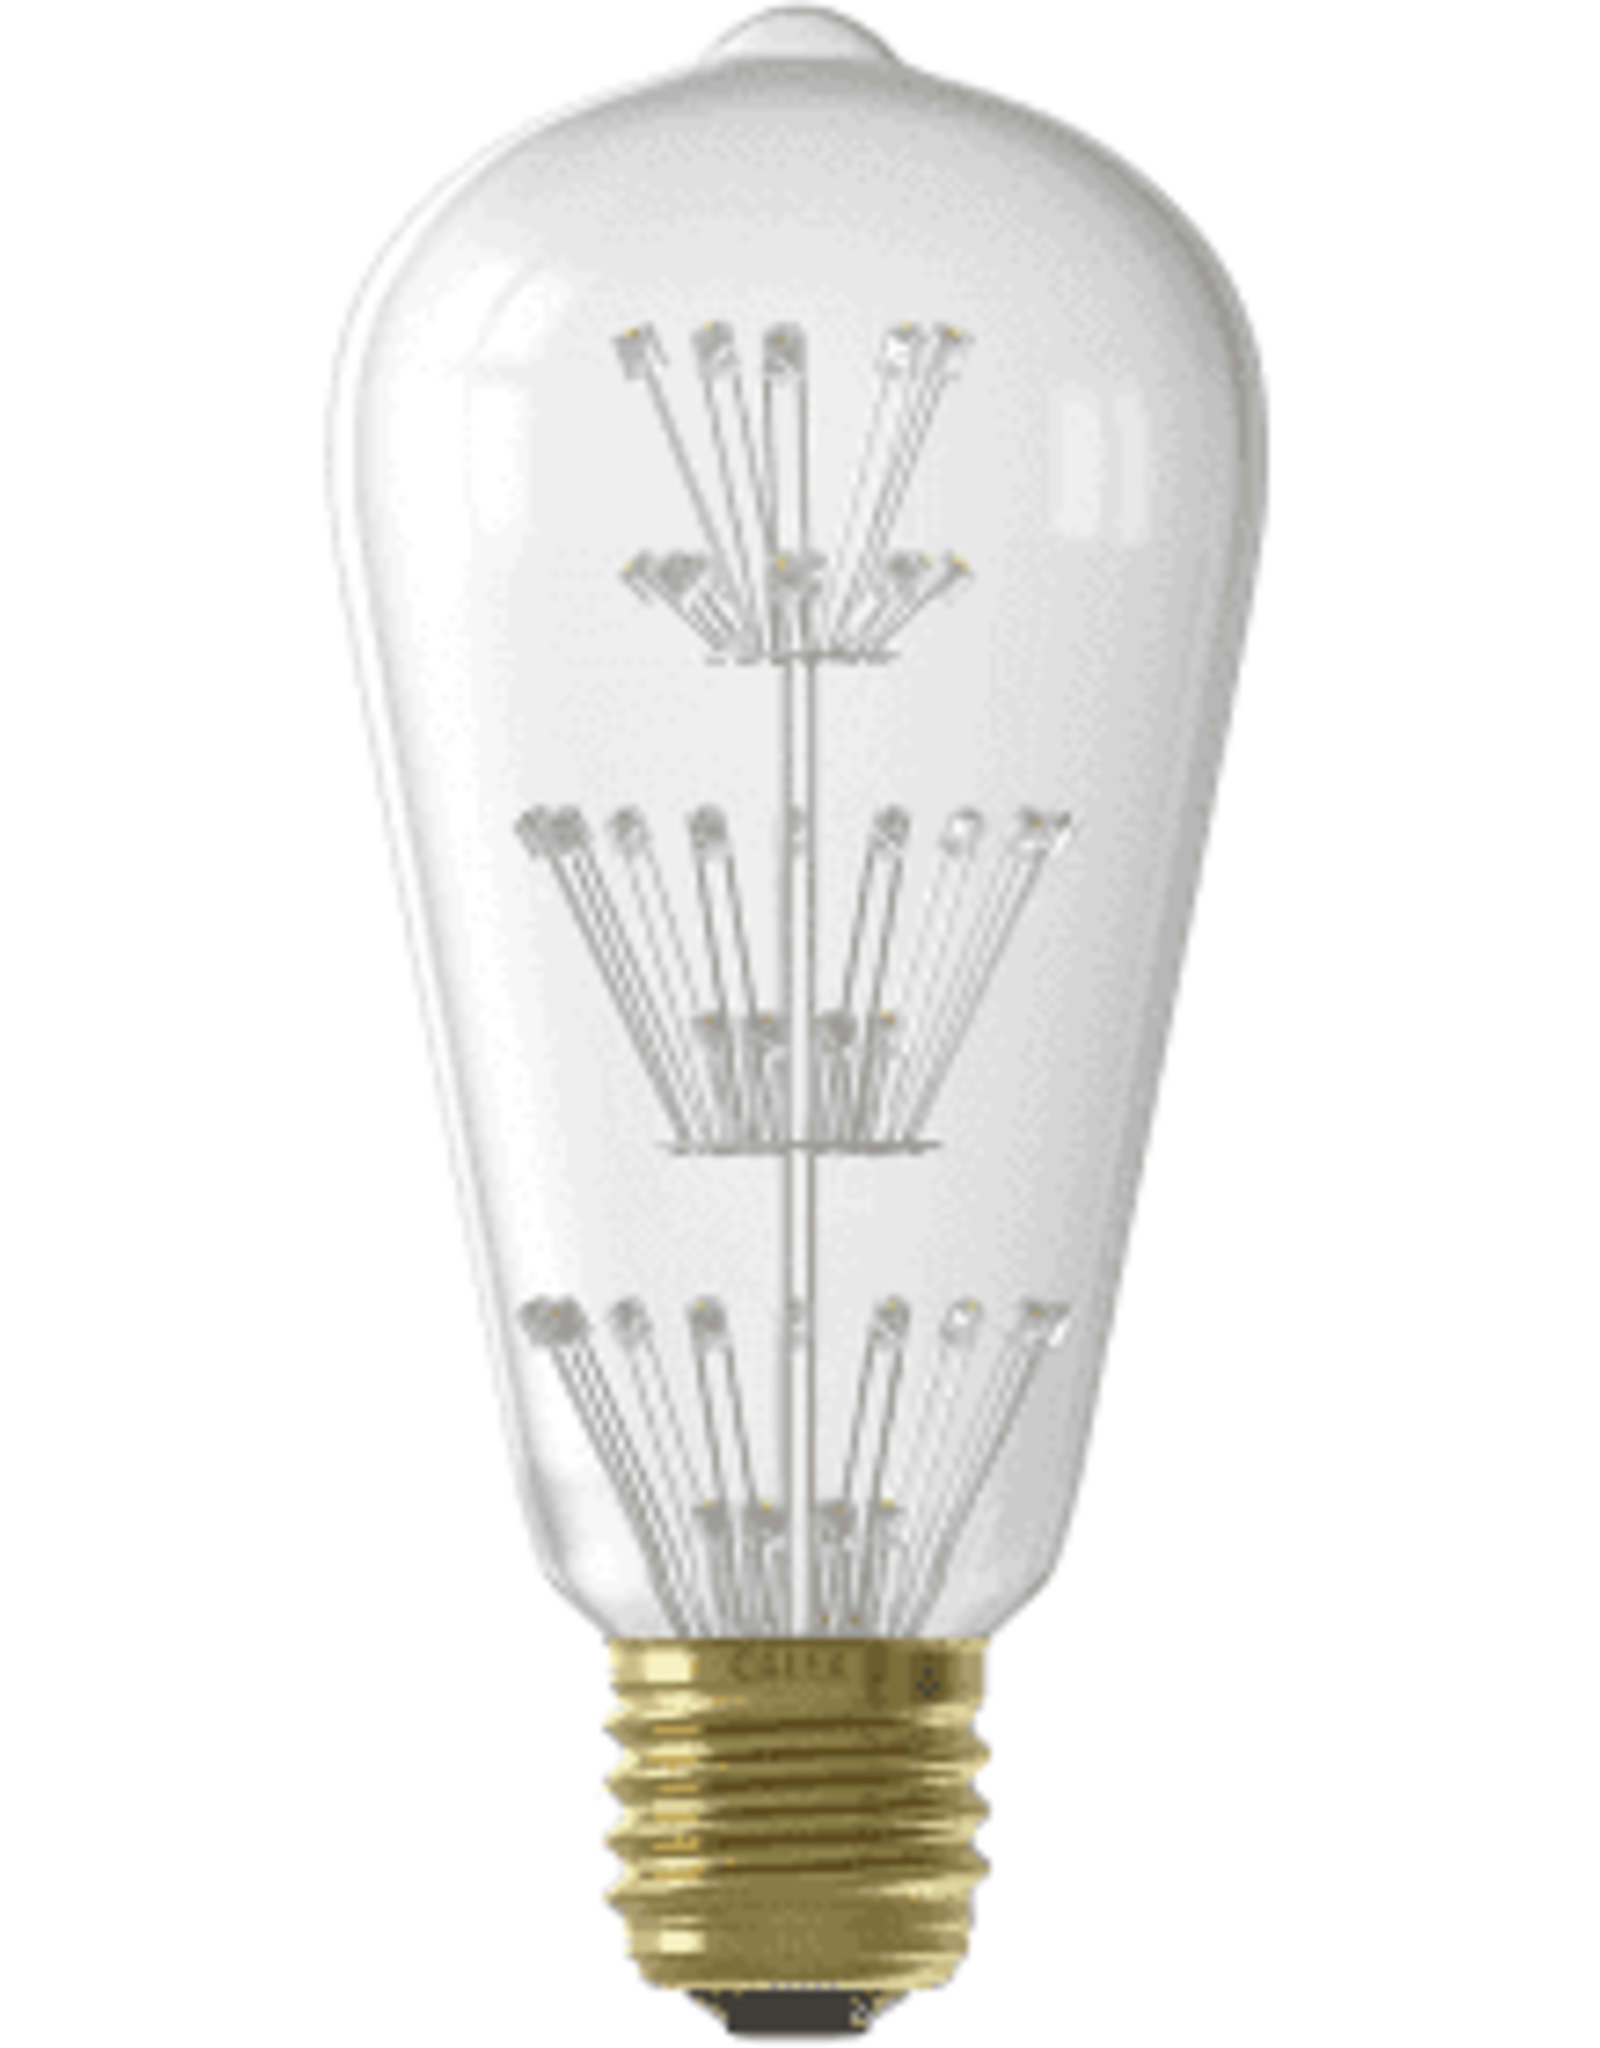 NML Calex Pearl LED Rustic lamp 220-240V 2W E27, 47-leds 2100K, energy label A++